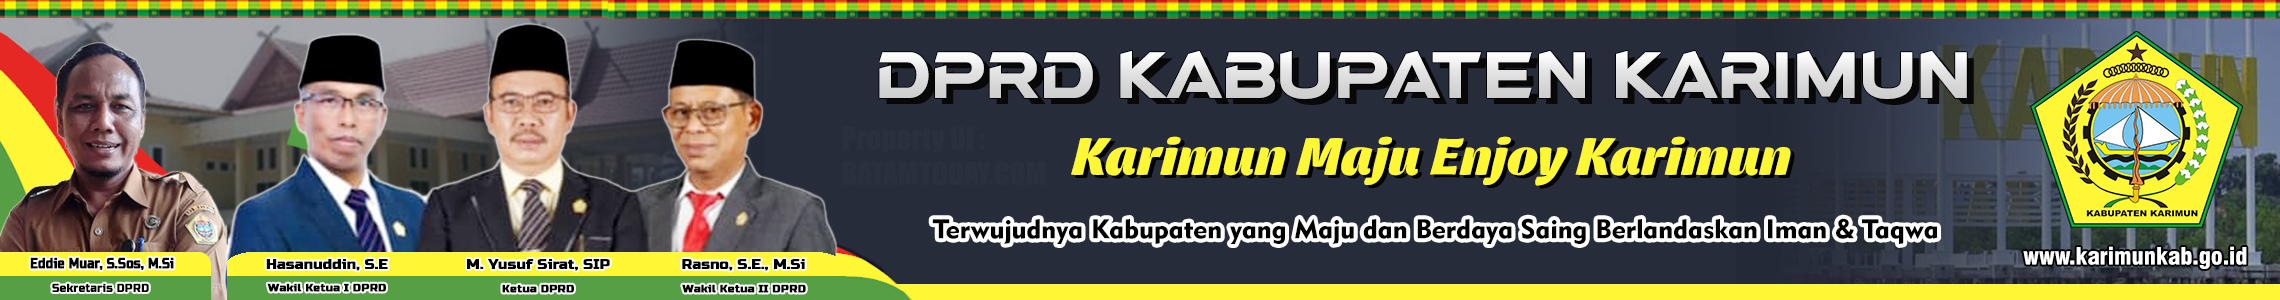 DPRD-Kab-Karimun